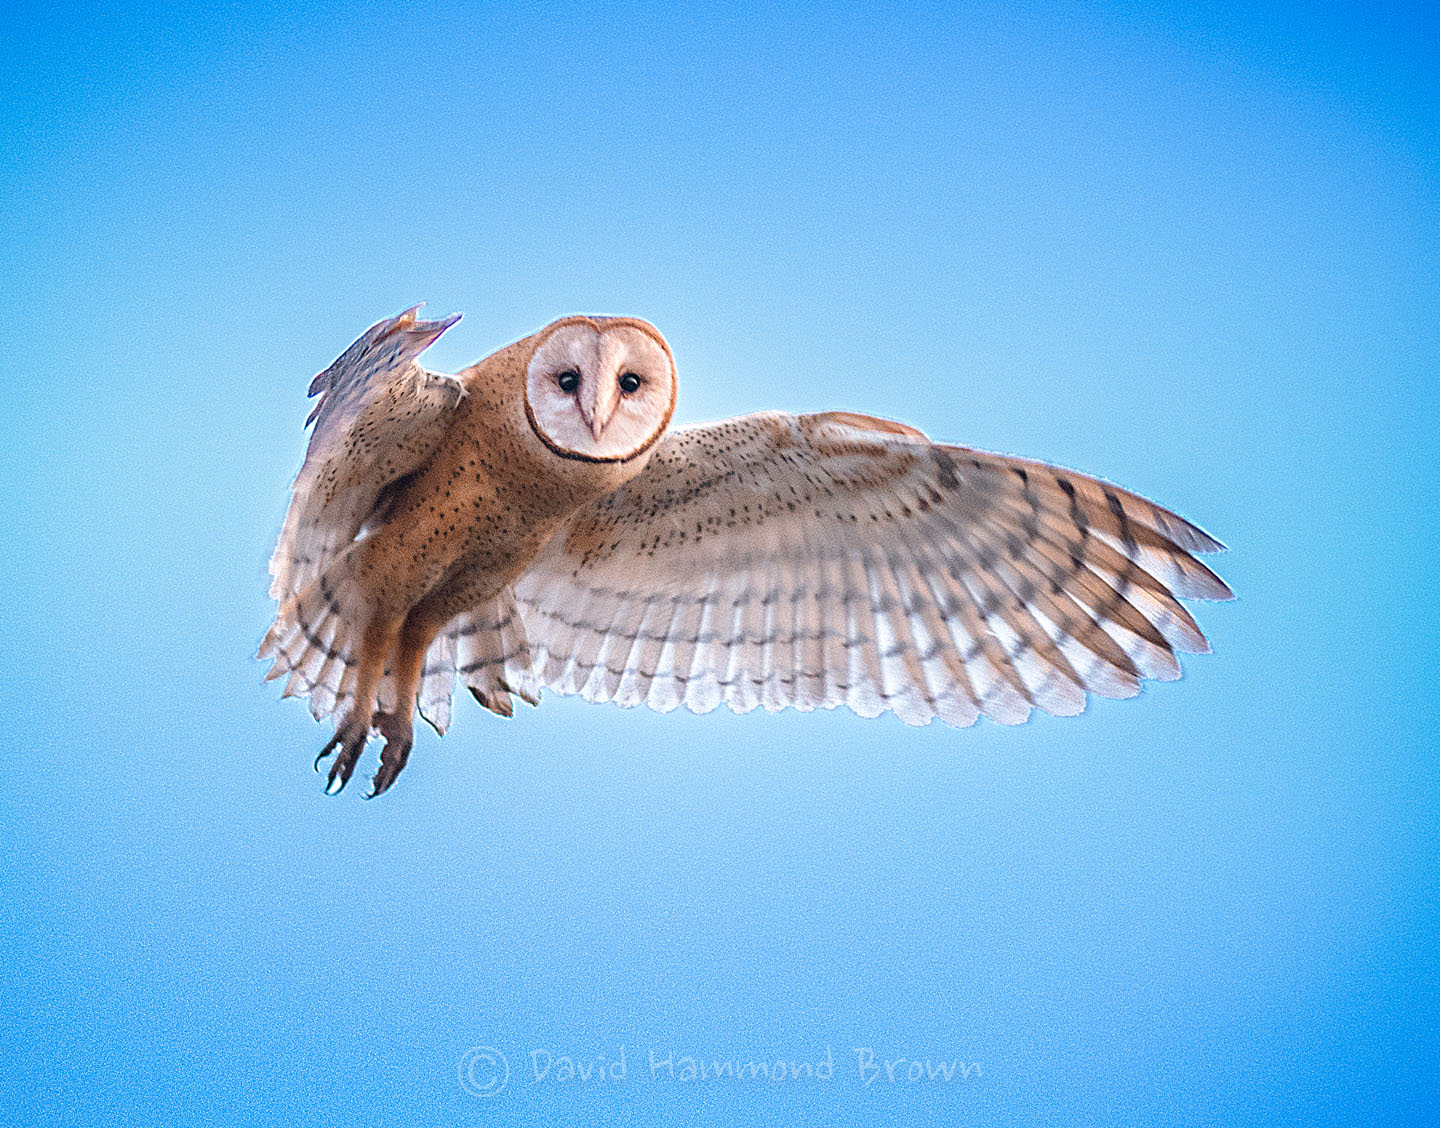 David Hammond Brown Photography - Vineyard Owl